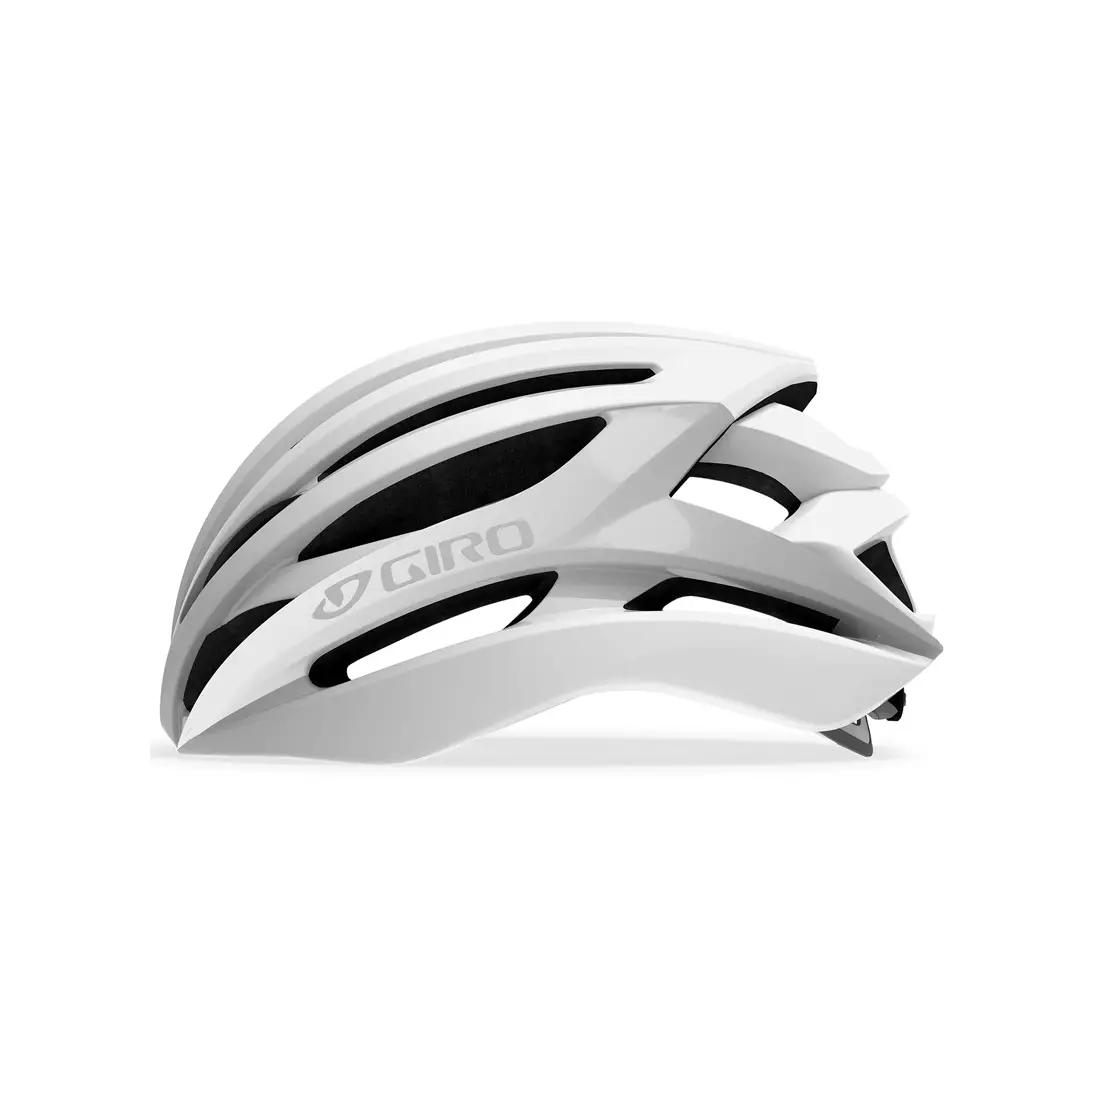 GIRO SYNTAX road bike helmet, matte white silver